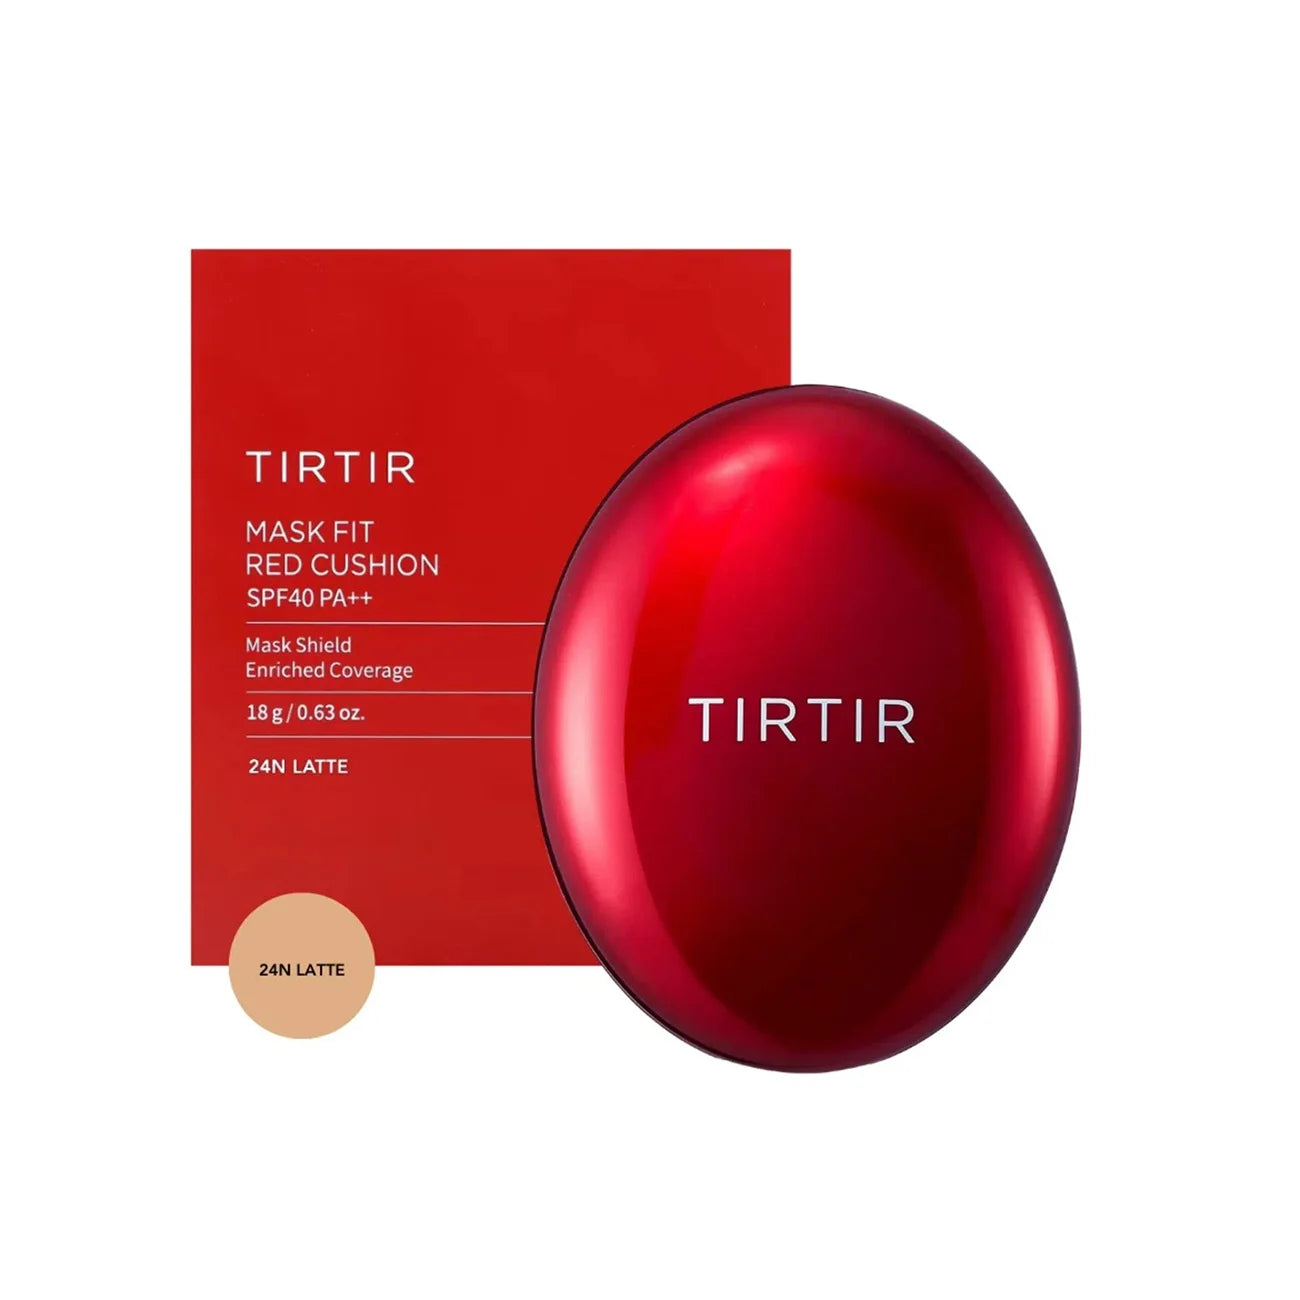 TIRTIR Mask Fit Red Cushion 24N Latte best full long-lasting coverage hydrating foundation Korean cosmetics makeup K Beauty World